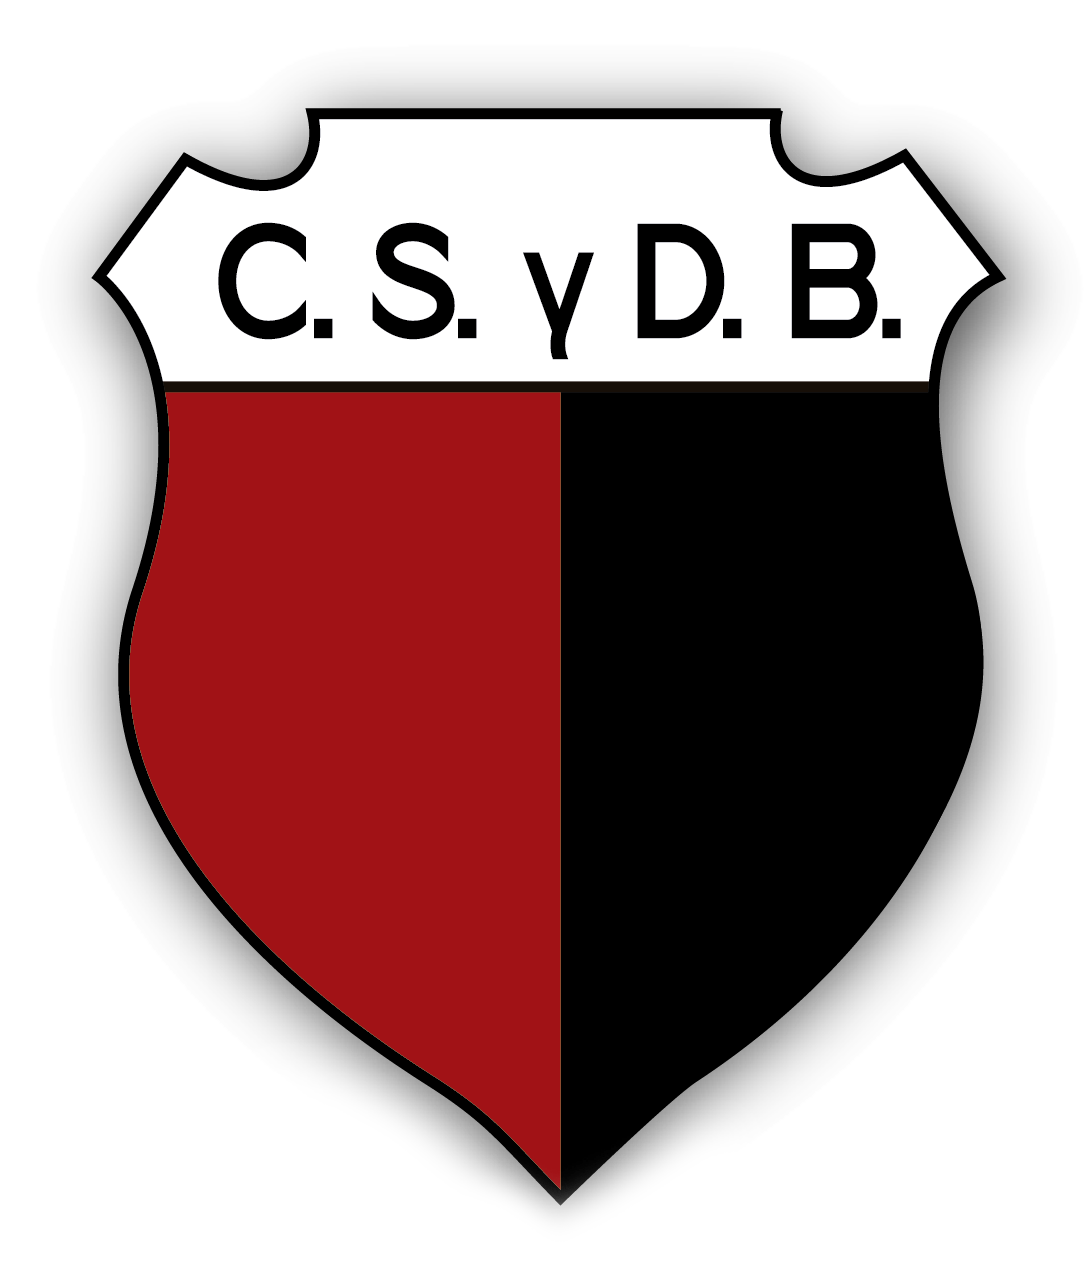 Deportivo Brinkmann